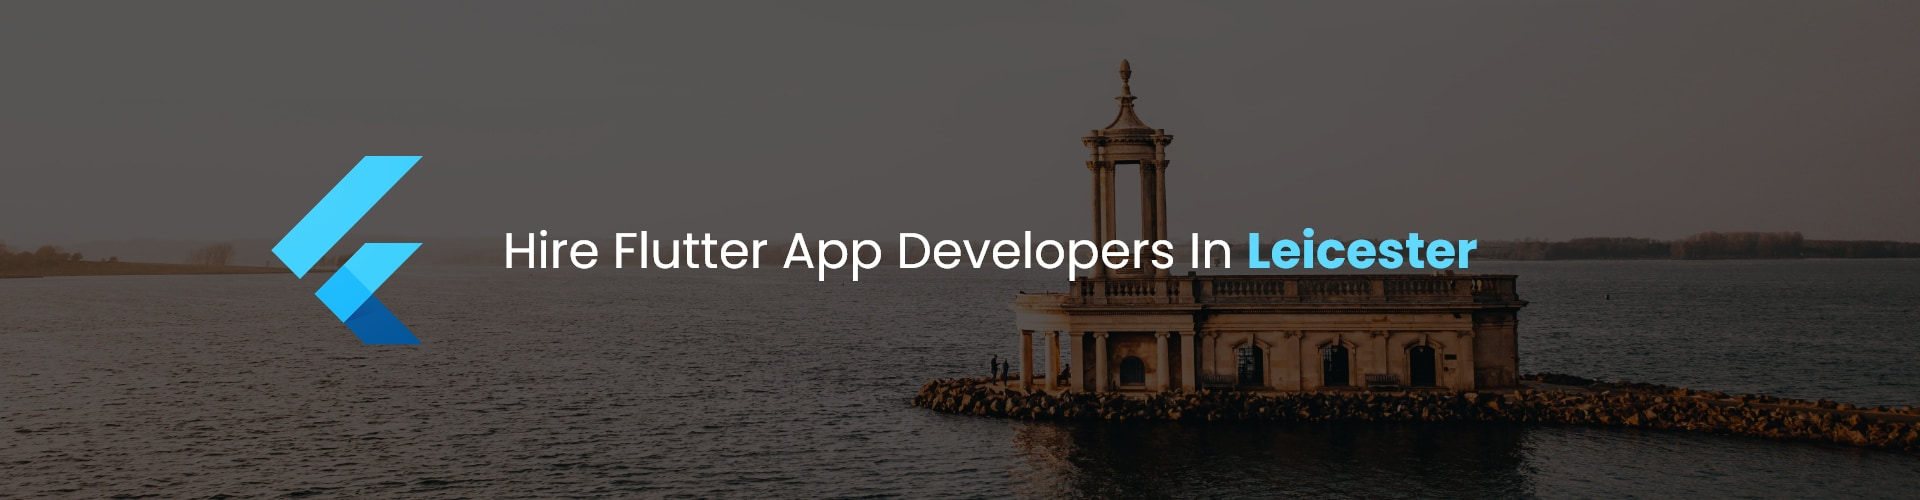 hire flutter app developers in leicester